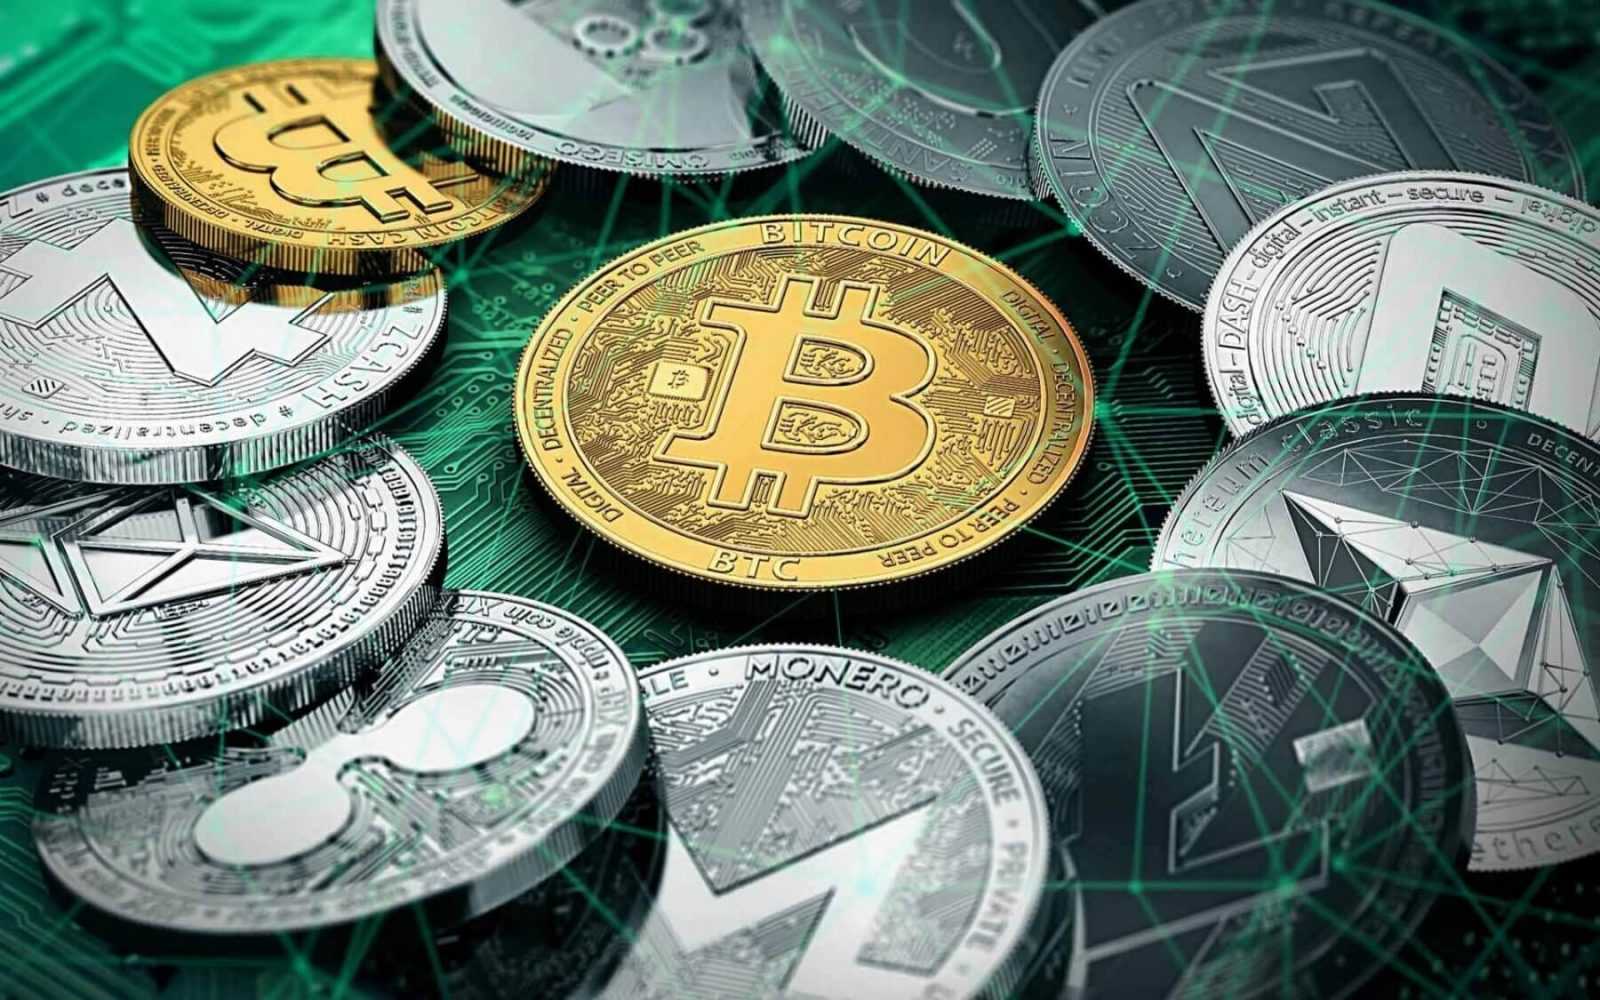 Cap crypto биткоин перевести в рубли онлайн